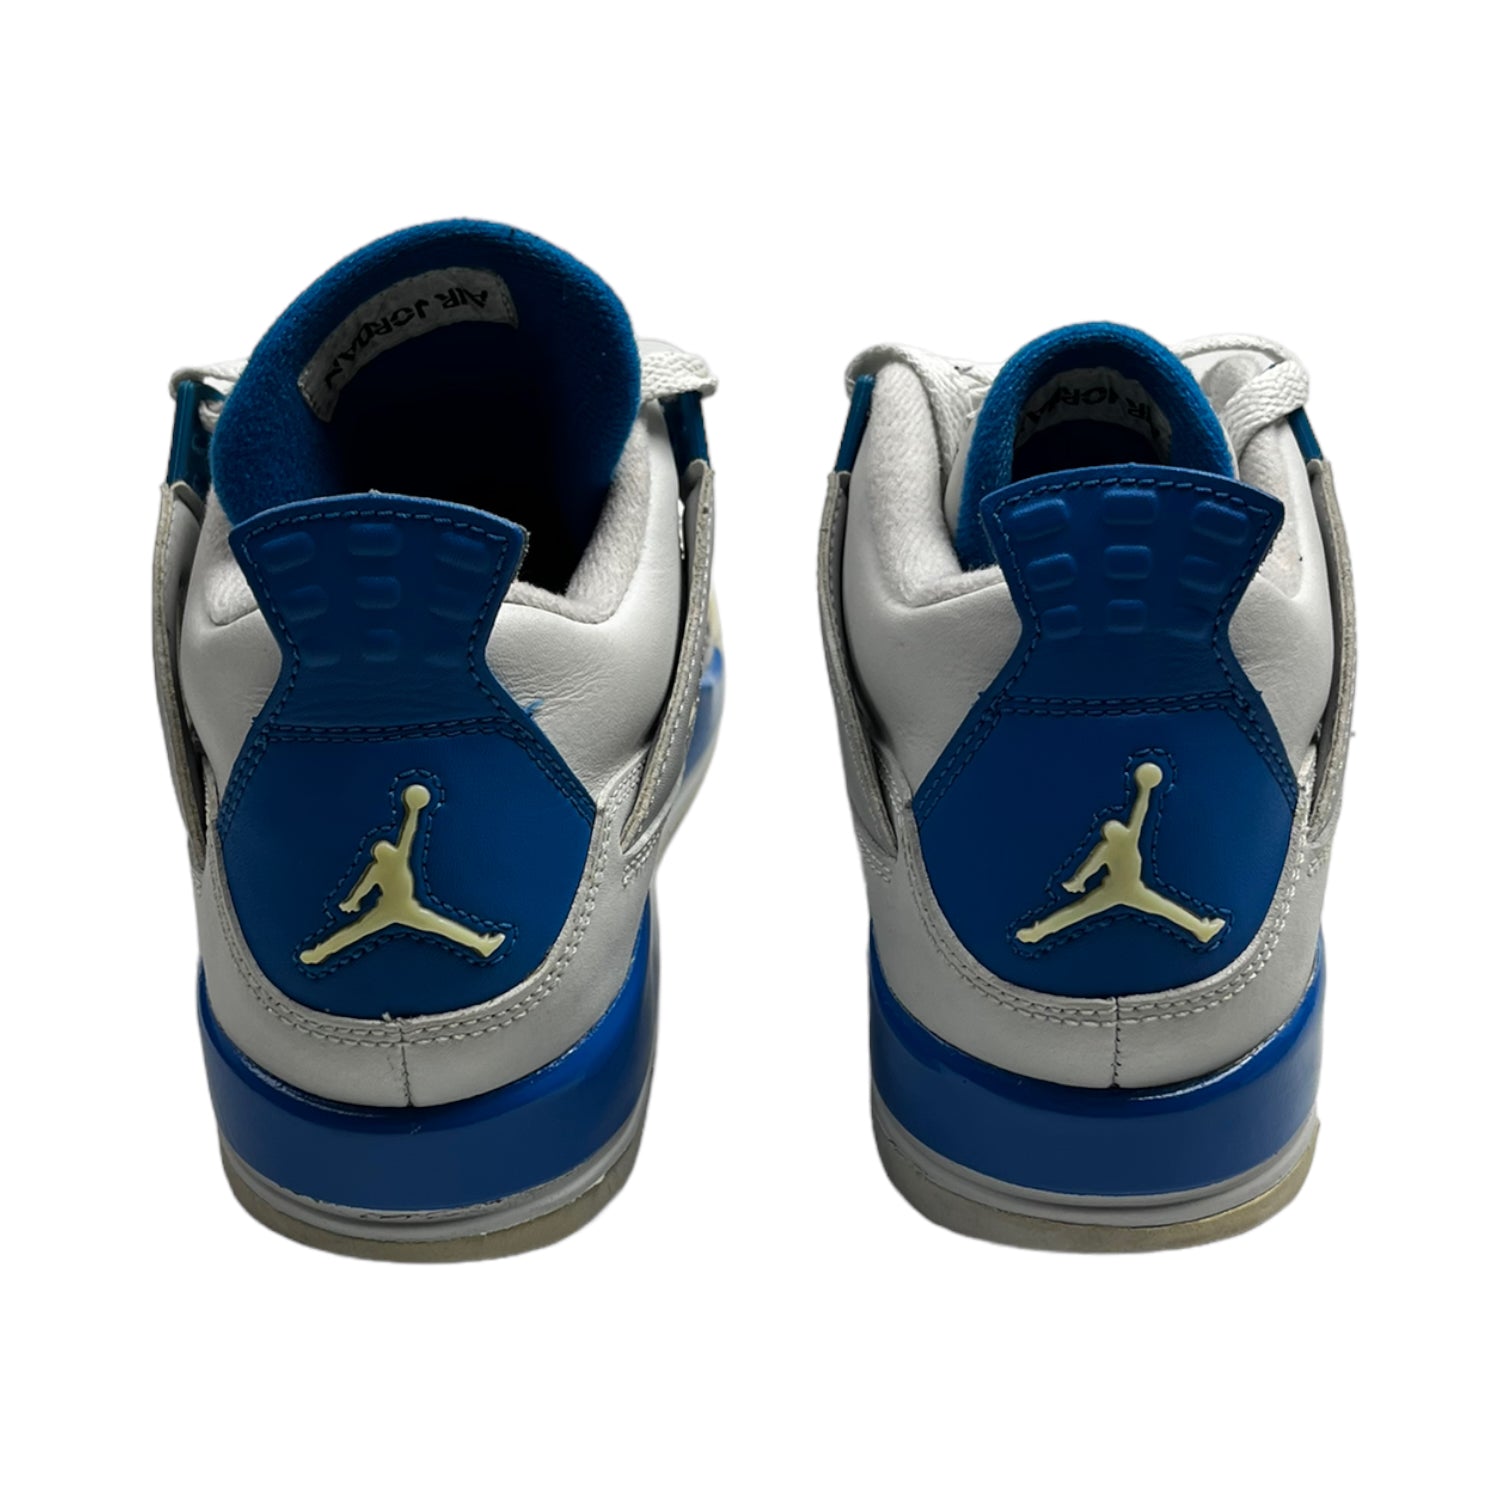 Jordan 4 Military Blue (Used)